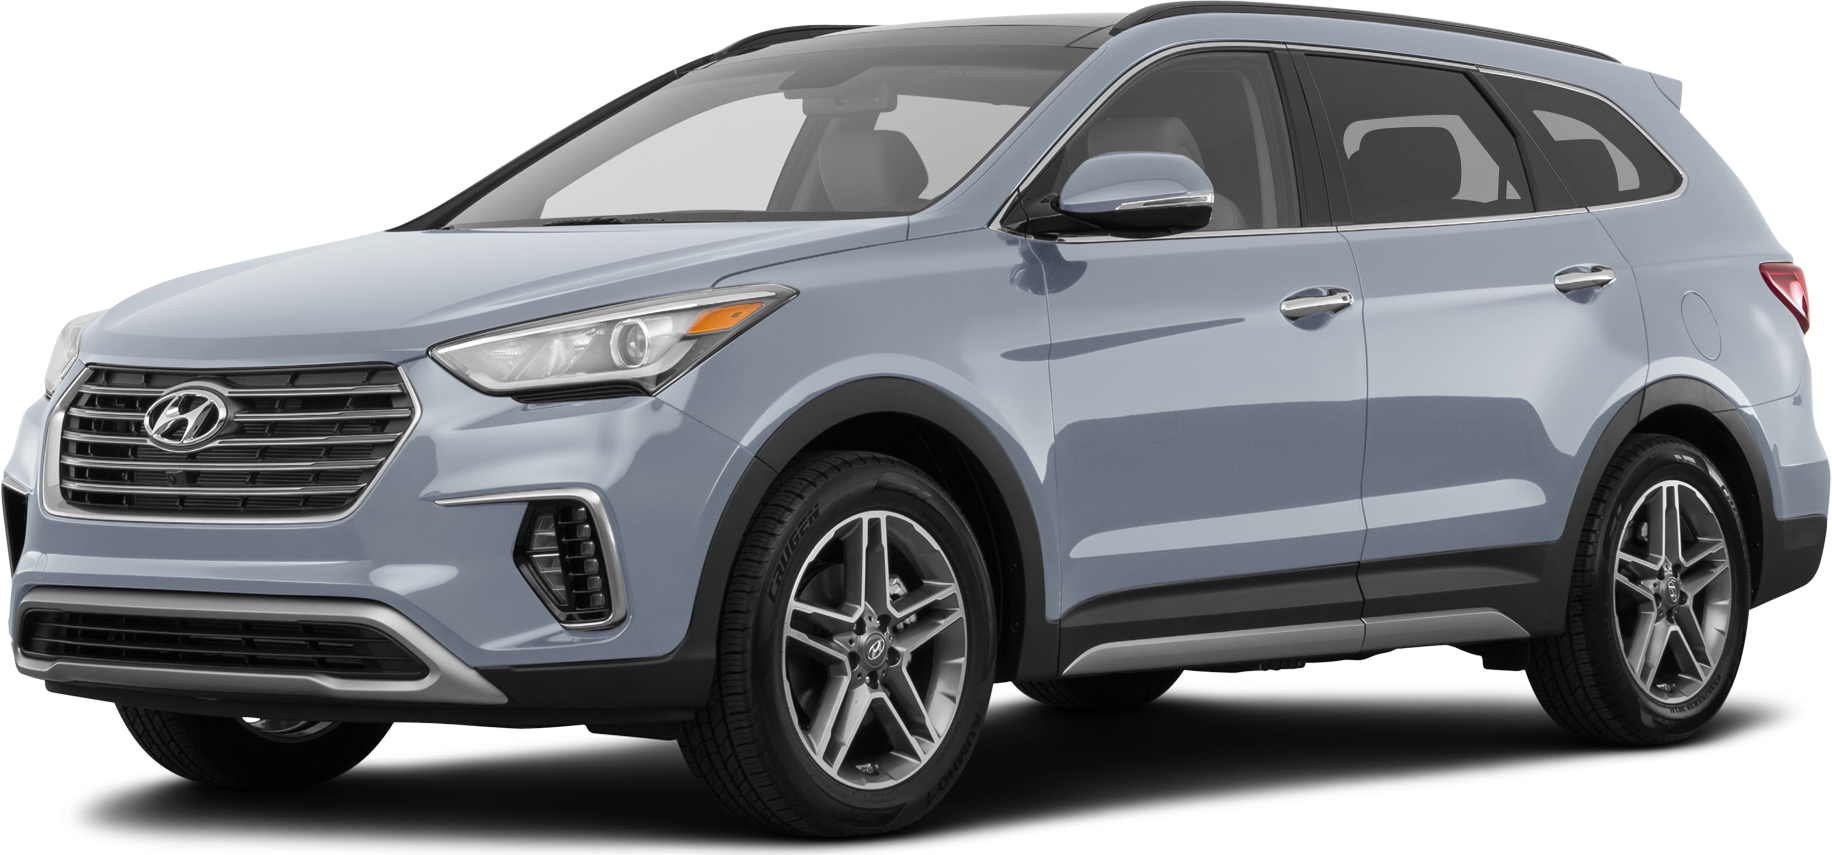 2018 Hyundai Santa Fe Specs and Features | Kelley Blue Book